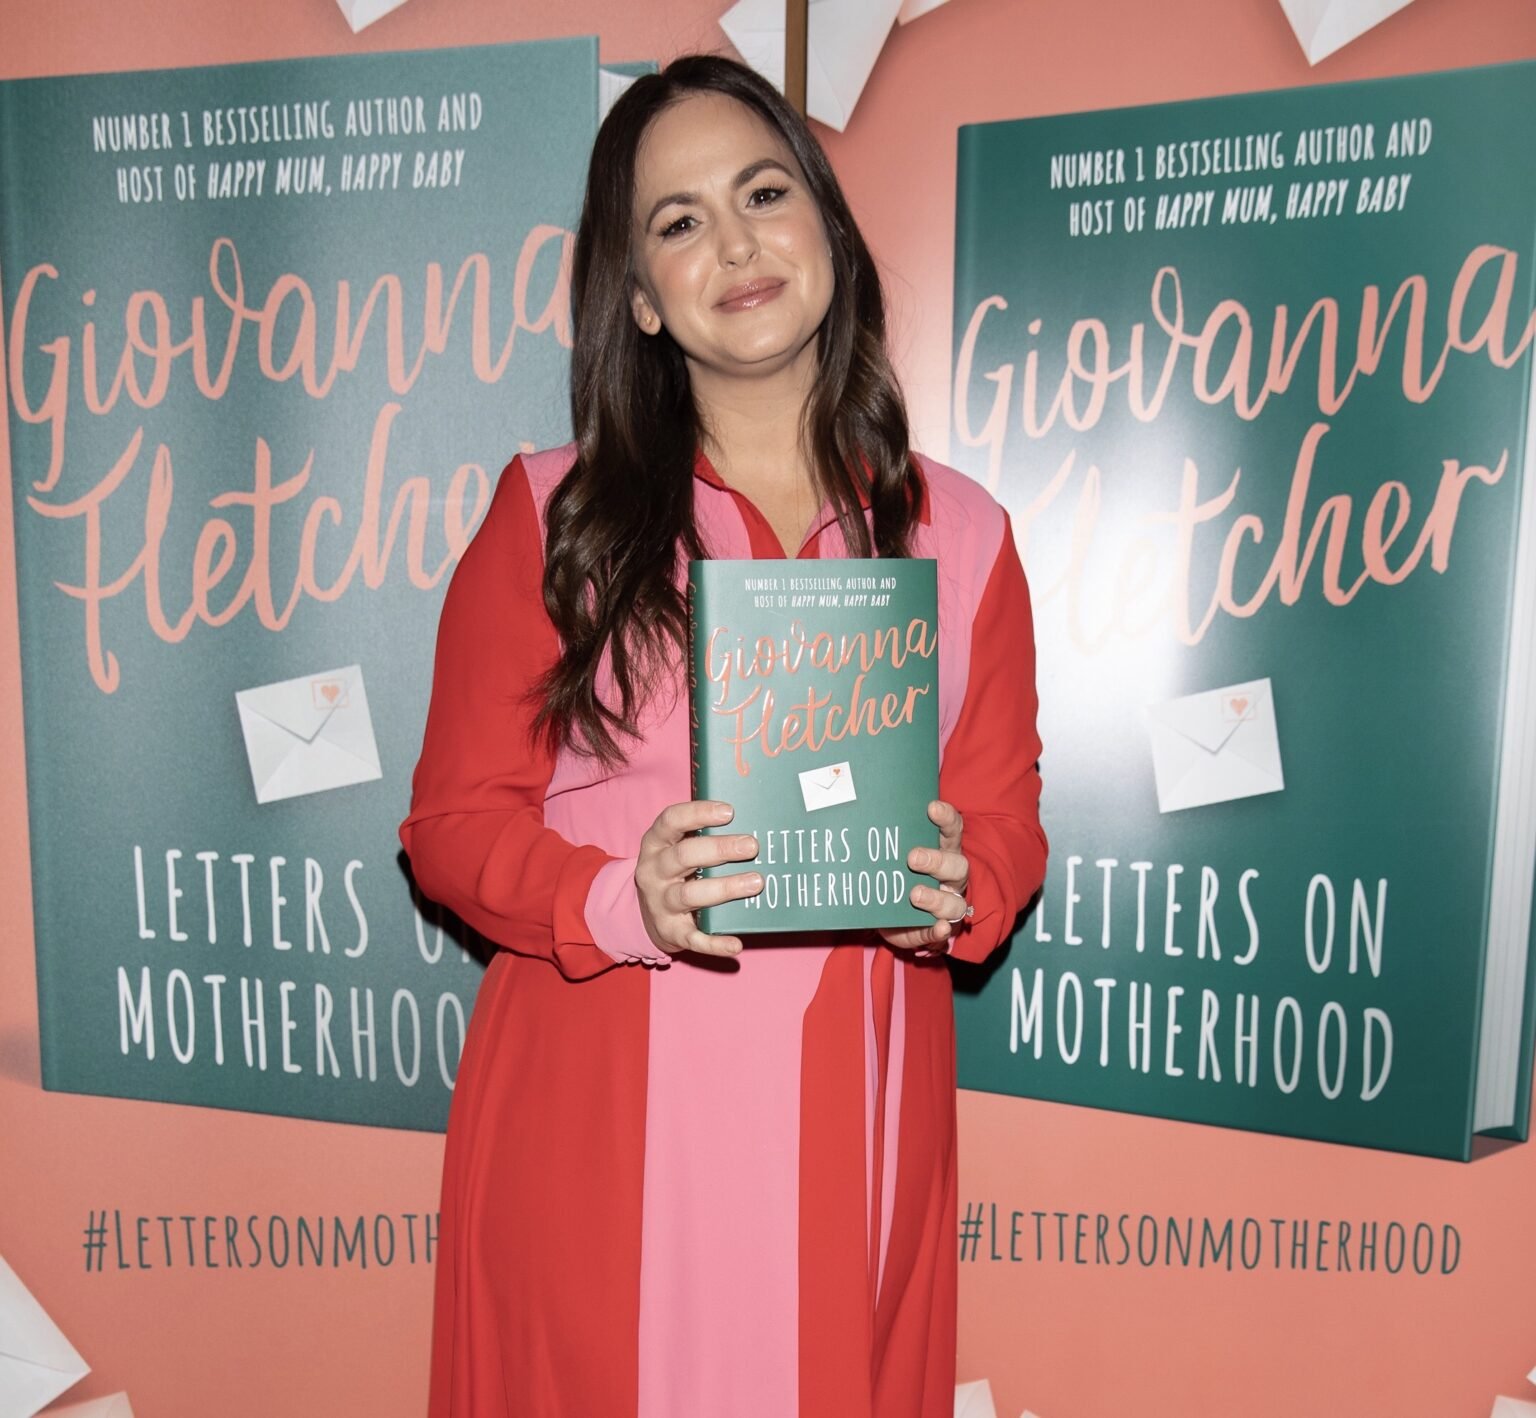 GIOVANNA FLETCHER'S LETTERS ON MOTHERHOOD BOOK LAUNCH